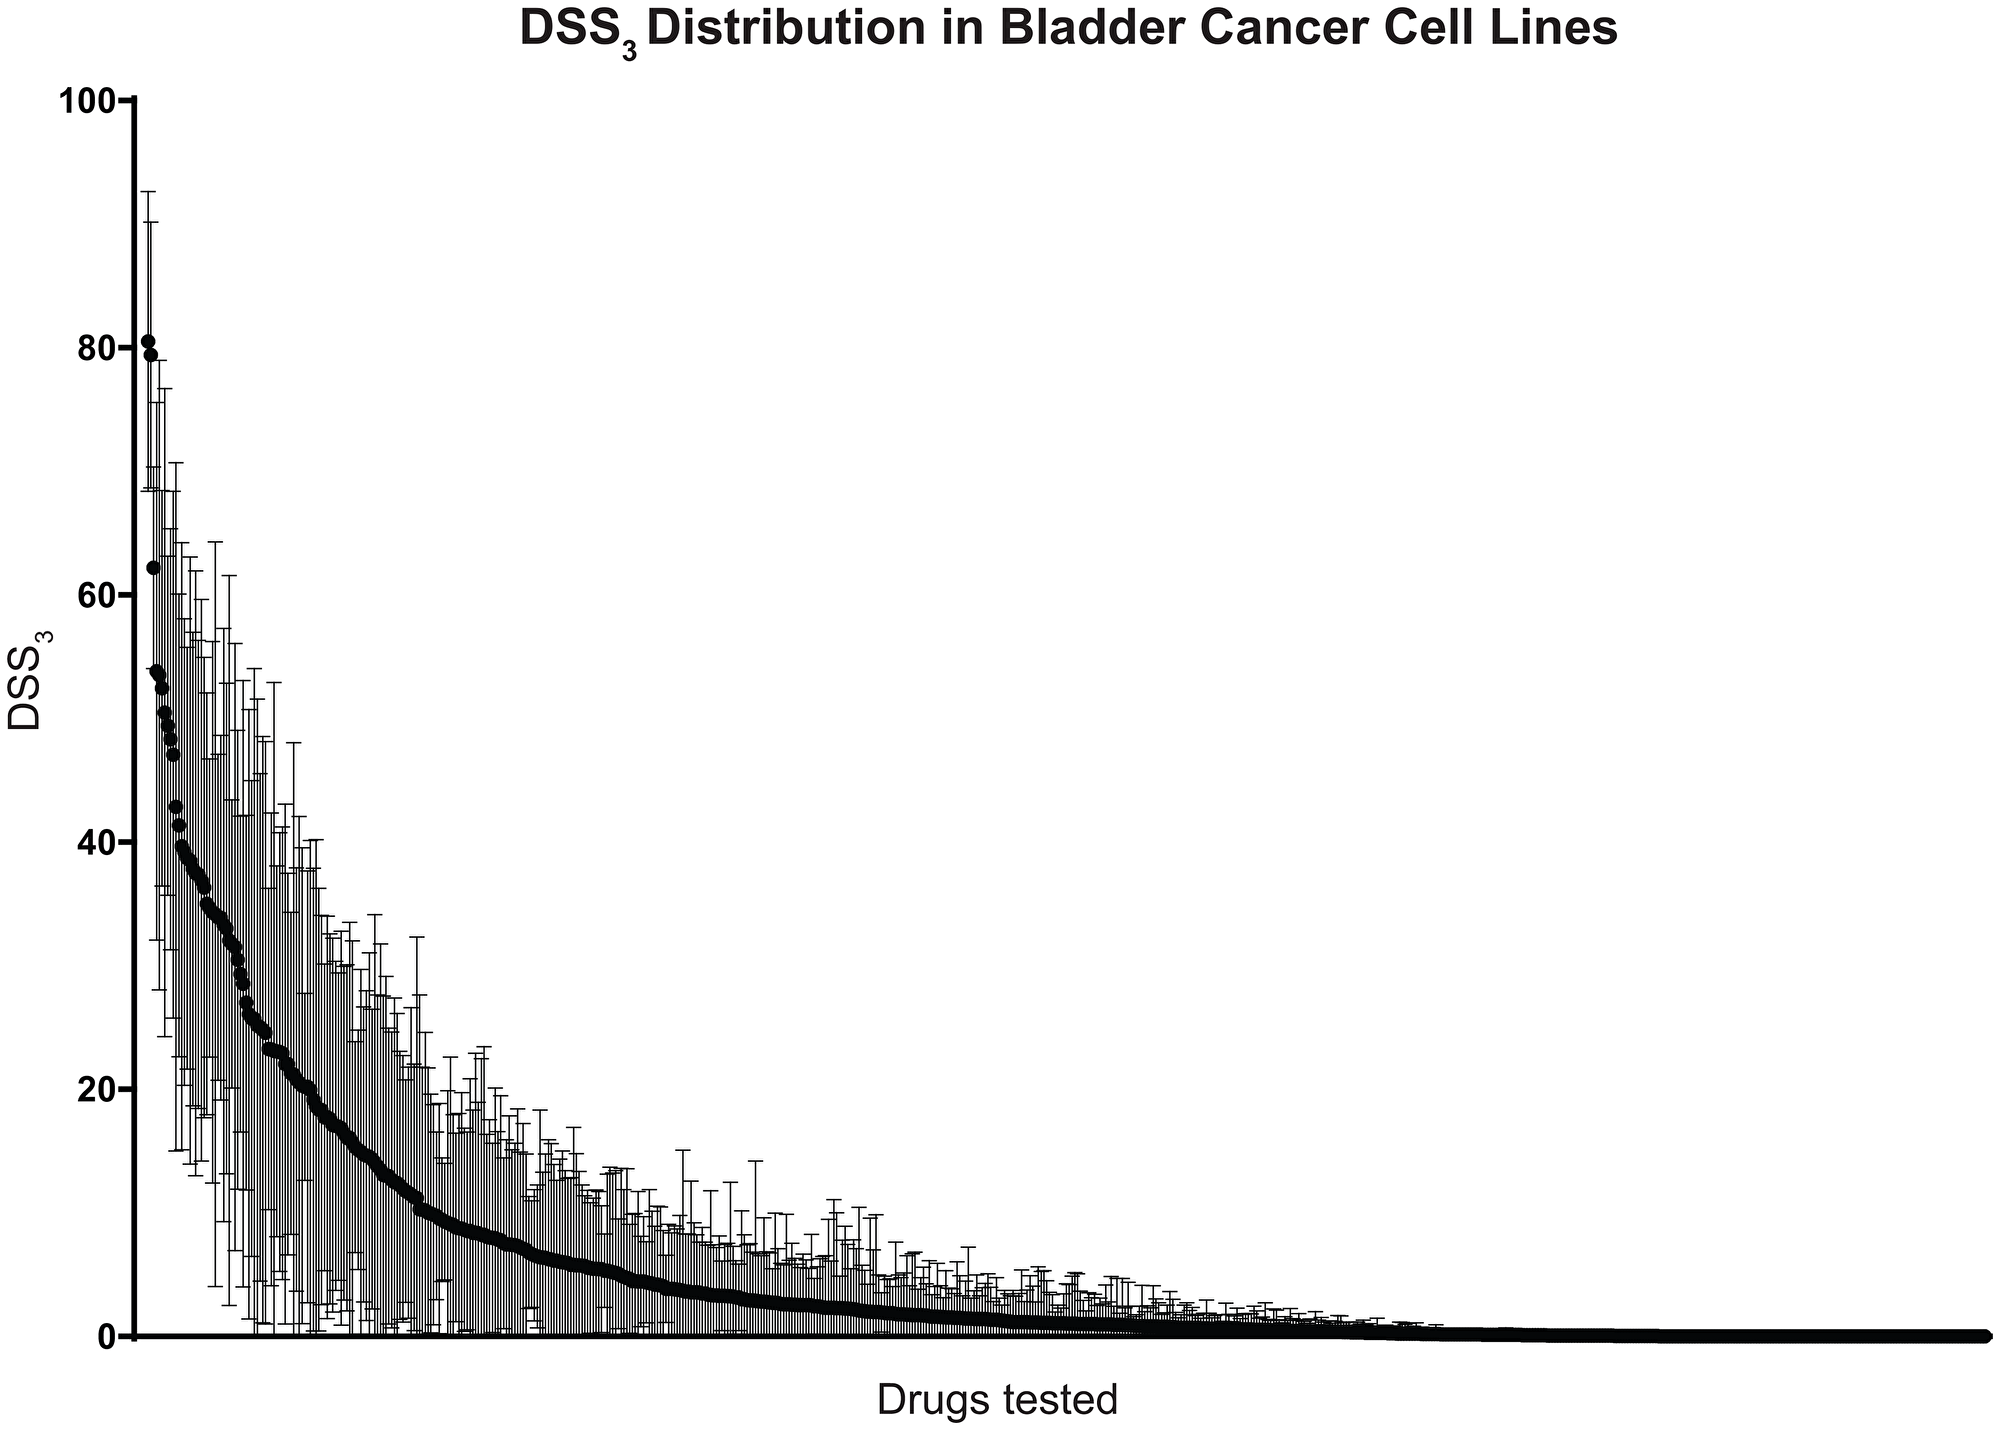 Distribution of drug sensitivities across bladder cancer cell lines.